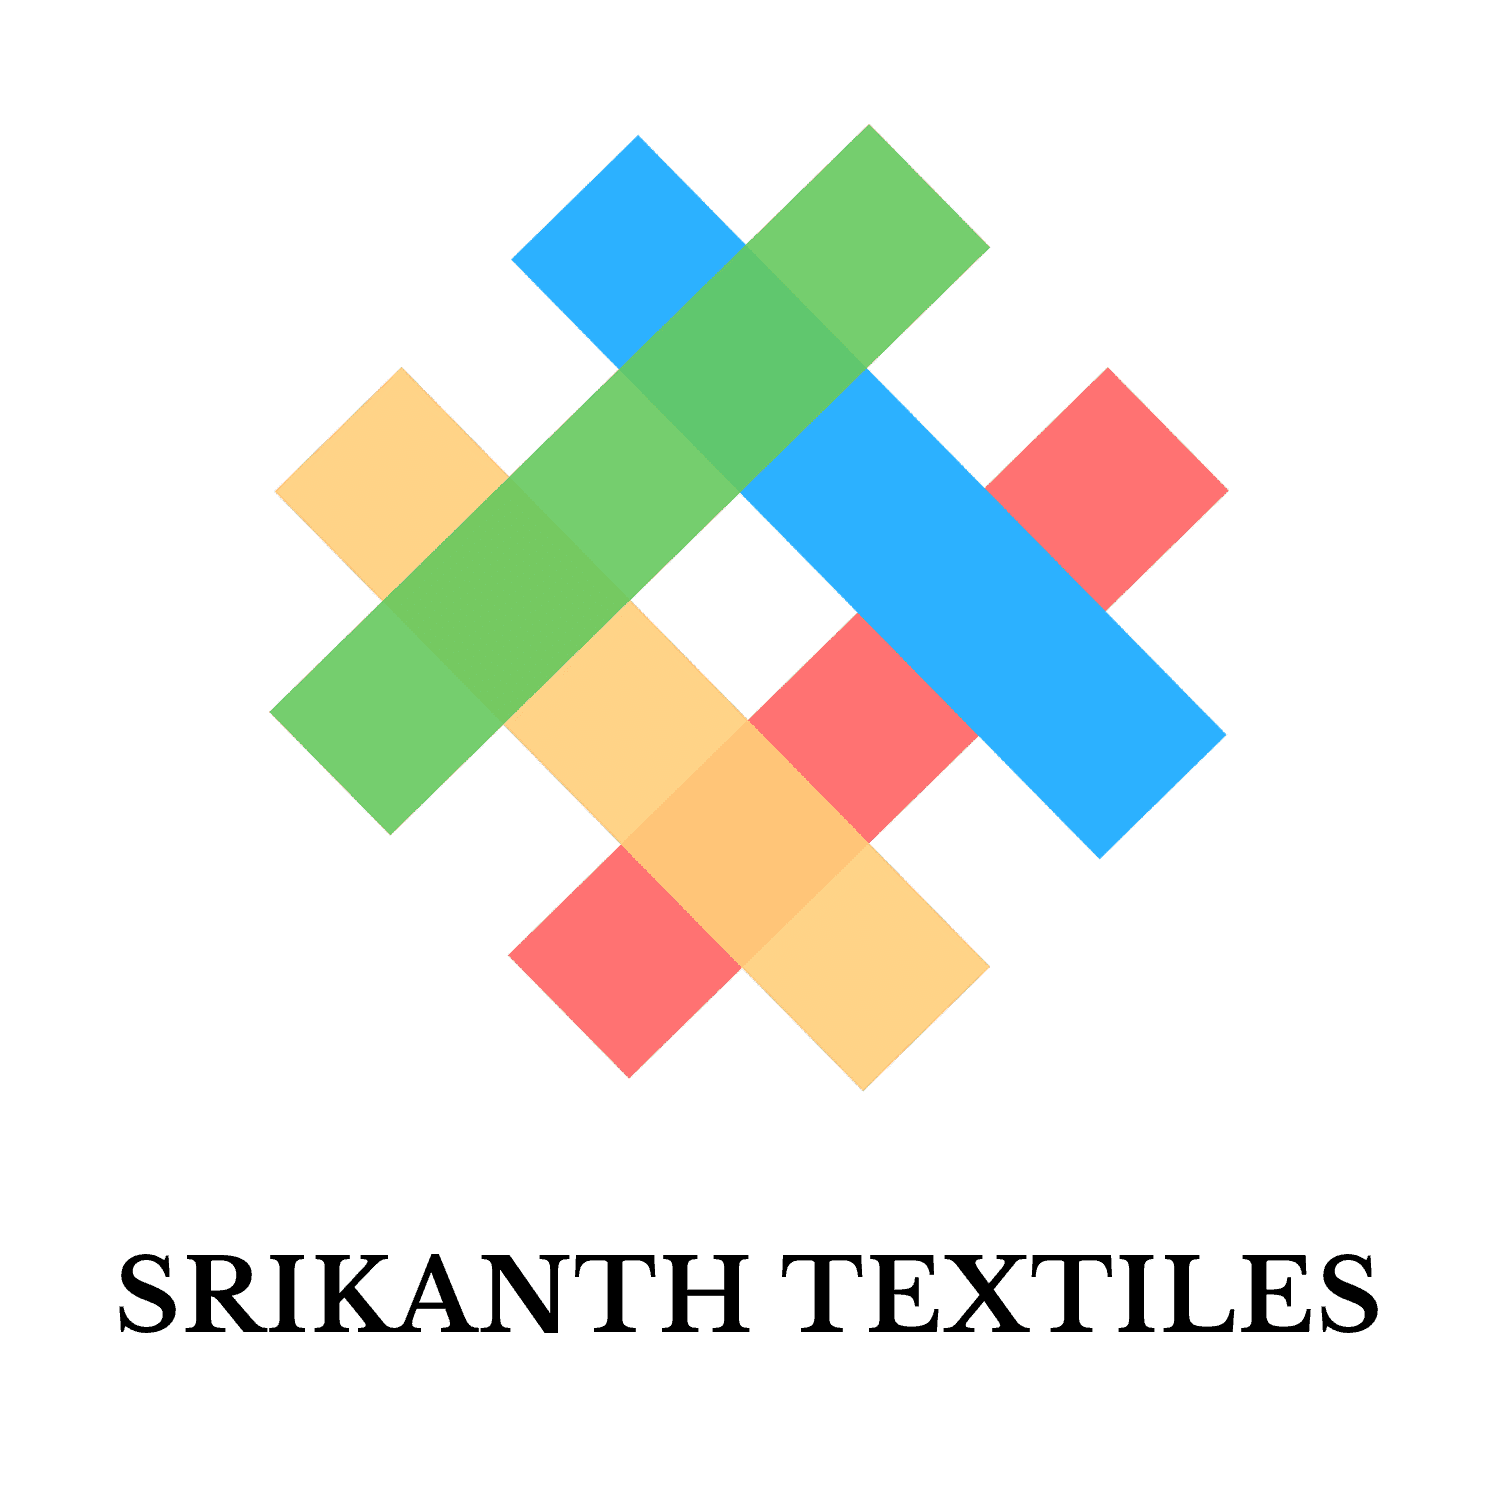 Srikanth Textiles